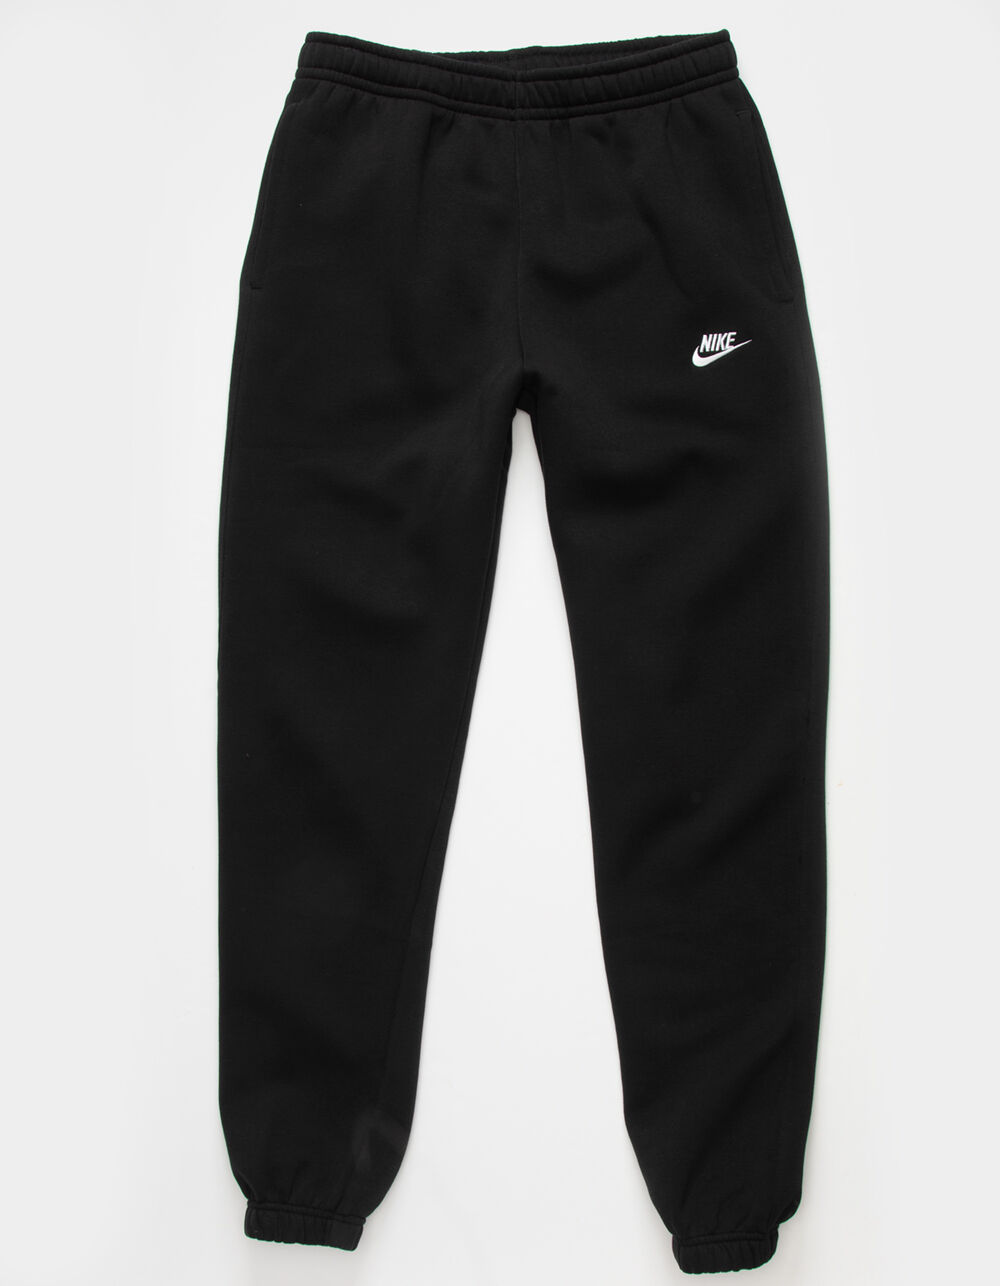 Nike Tech Fleece Gray Sweatpants-Grey  Nike women sweatpants, Nike  sweatpants outfit, Nike tech fleece